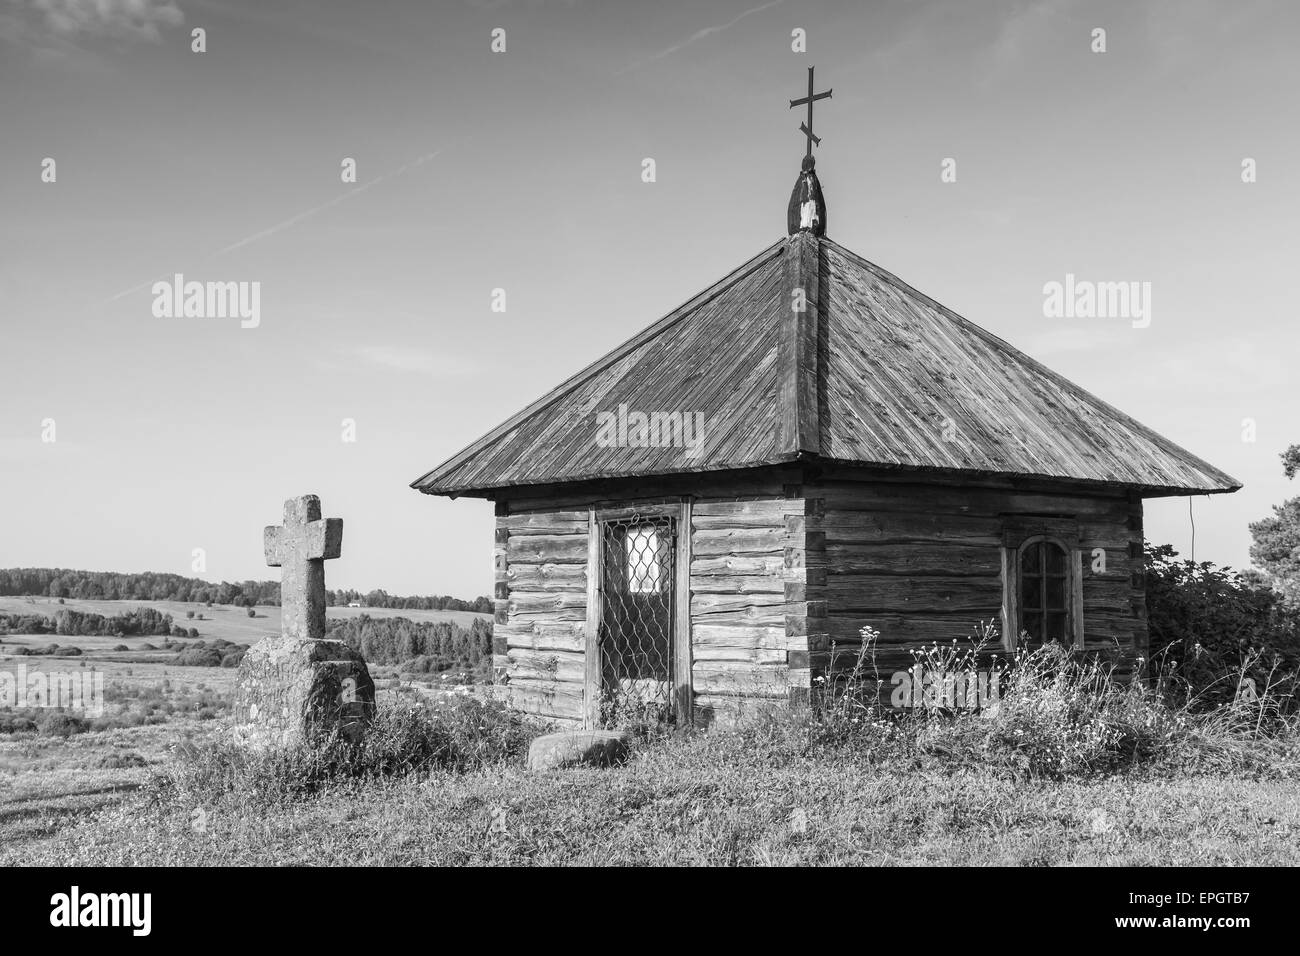 Ancient wooden Orthodox chapel and a stone cross on Savkina gorka, Pskov Region, Russia. Black and white photo Stock Photo